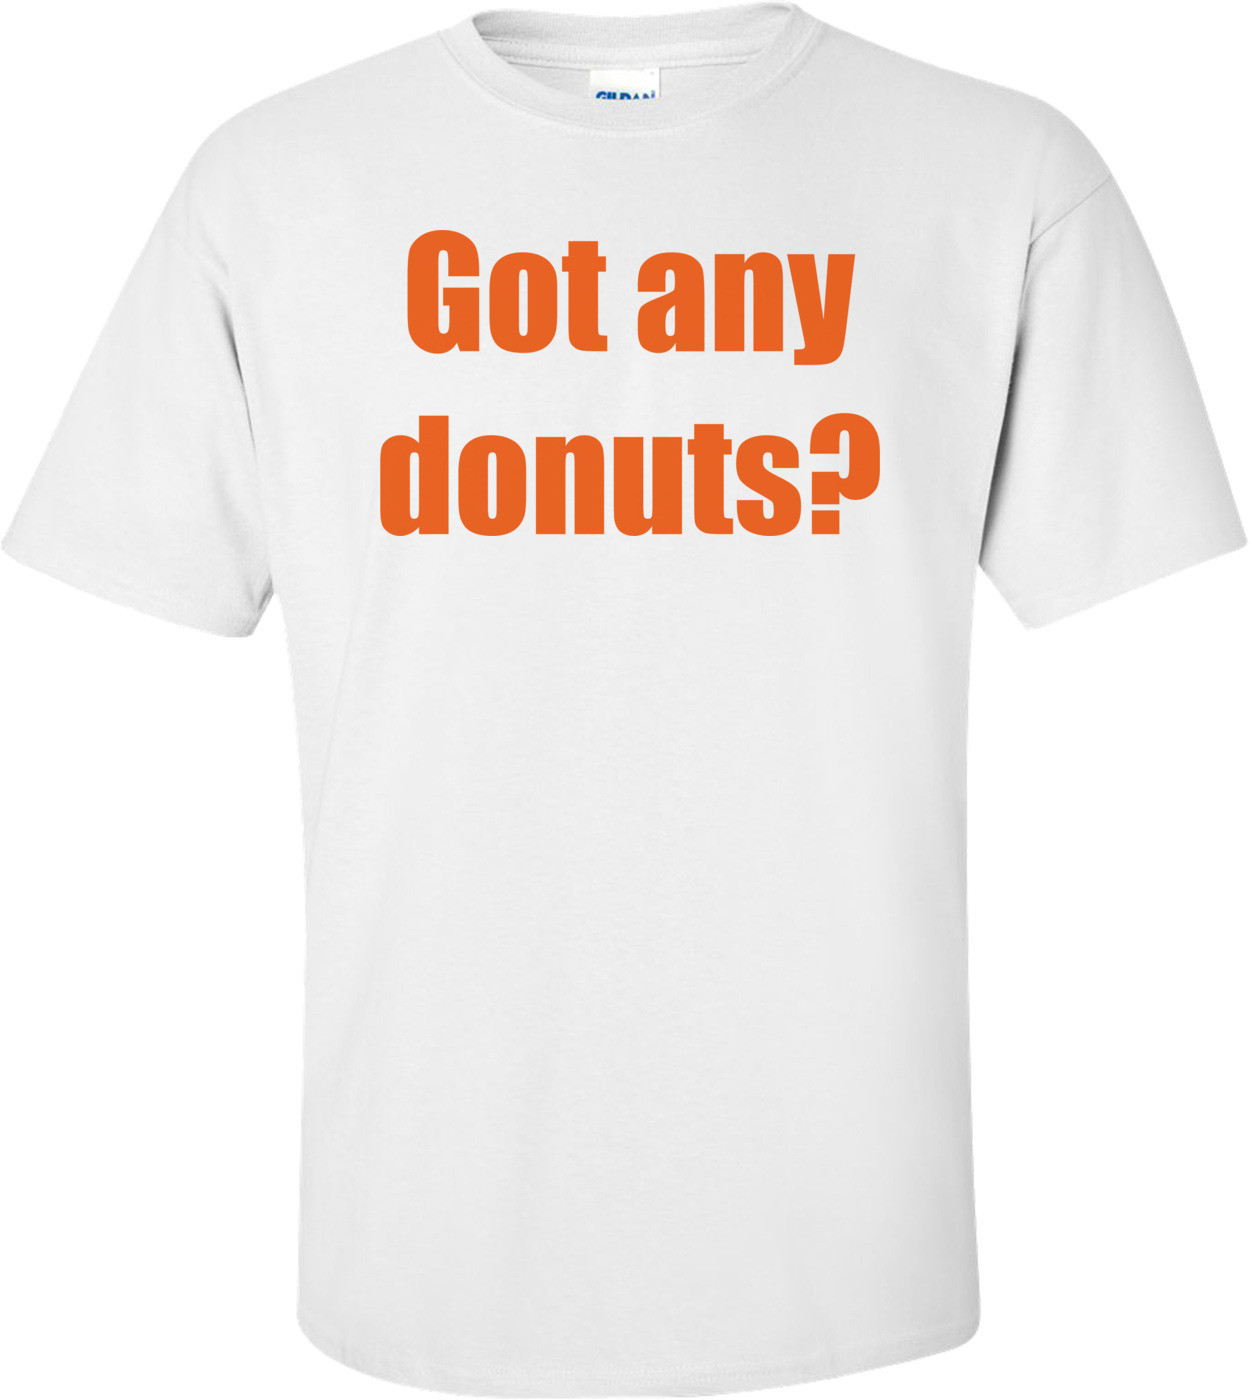 Got any donuts?